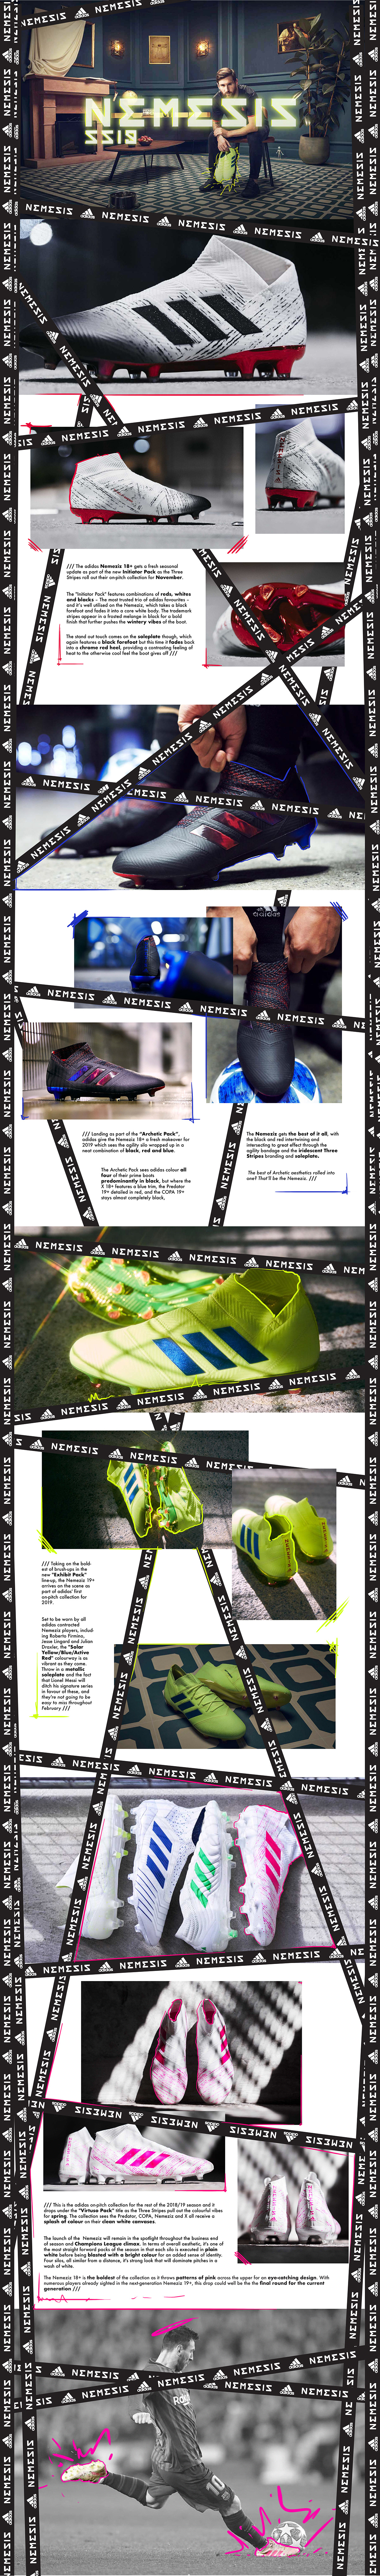 footwear footwear design adidas NEMEZIZ adidas football Football Footwear Color & Materials Leo Messi